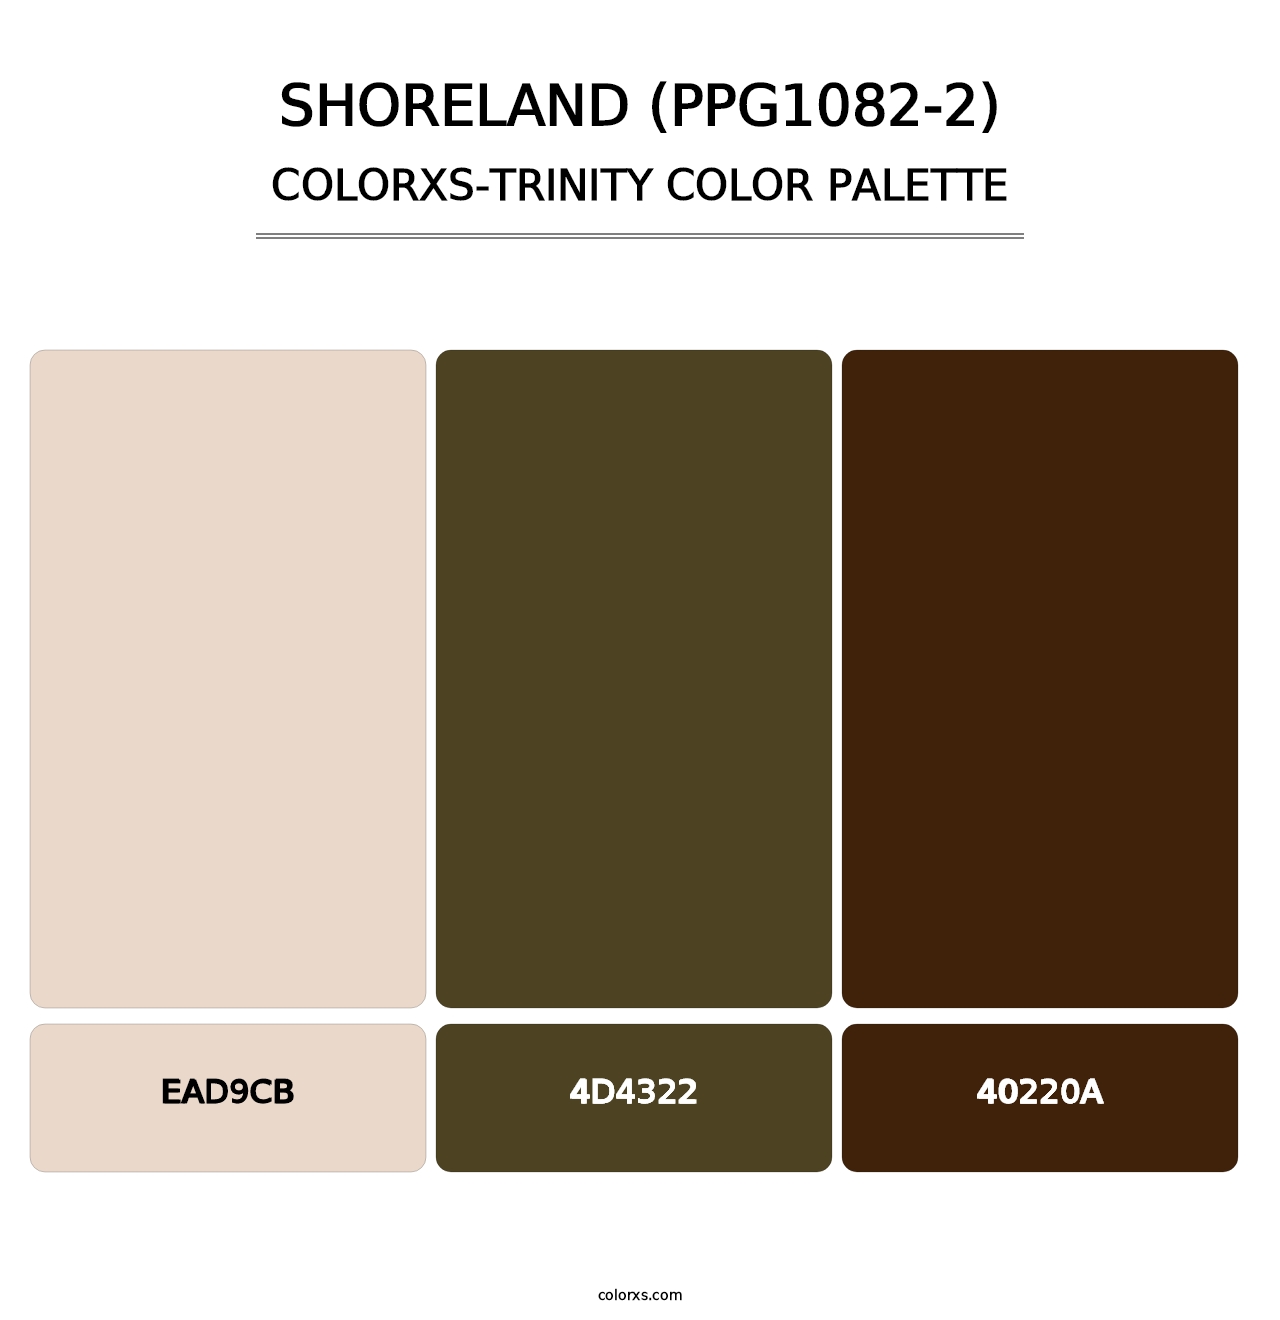 Shoreland (PPG1082-2) - Colorxs Trinity Palette